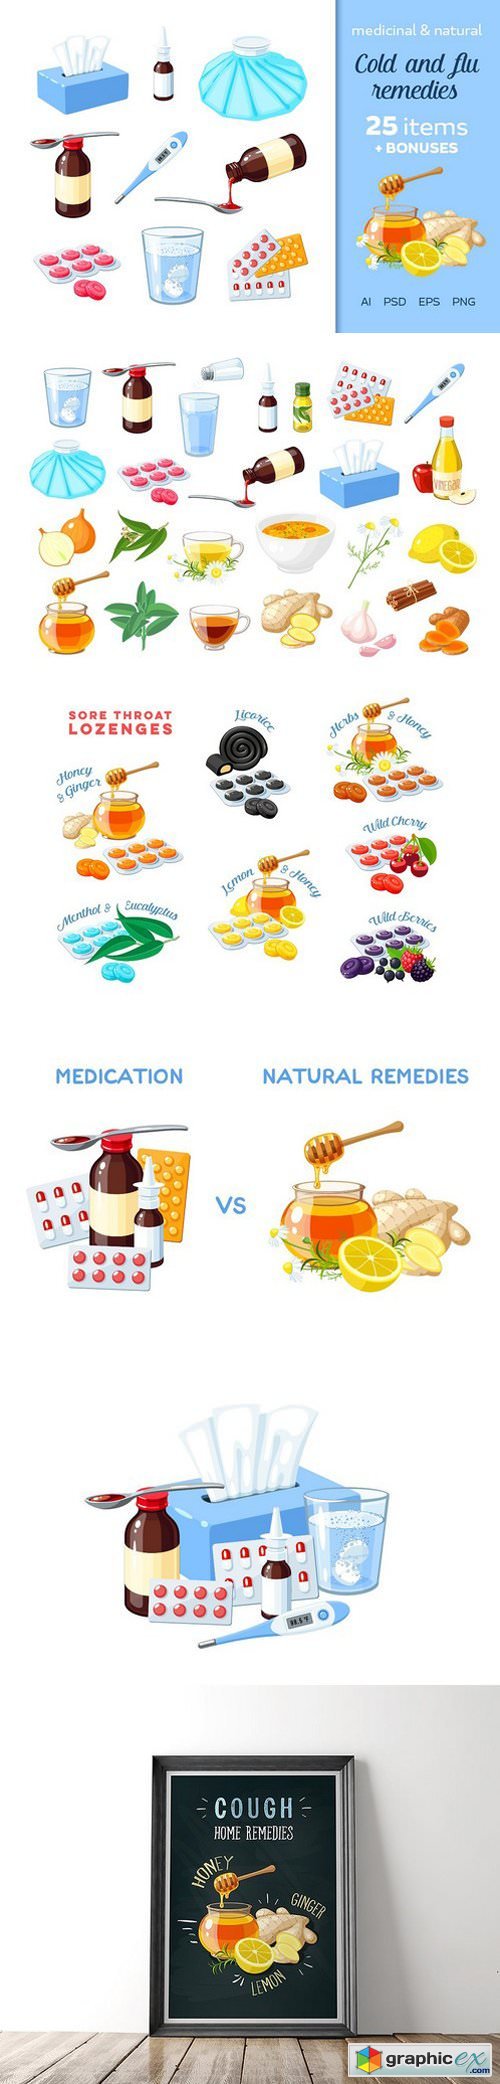 Medicinal and natural flu remedies